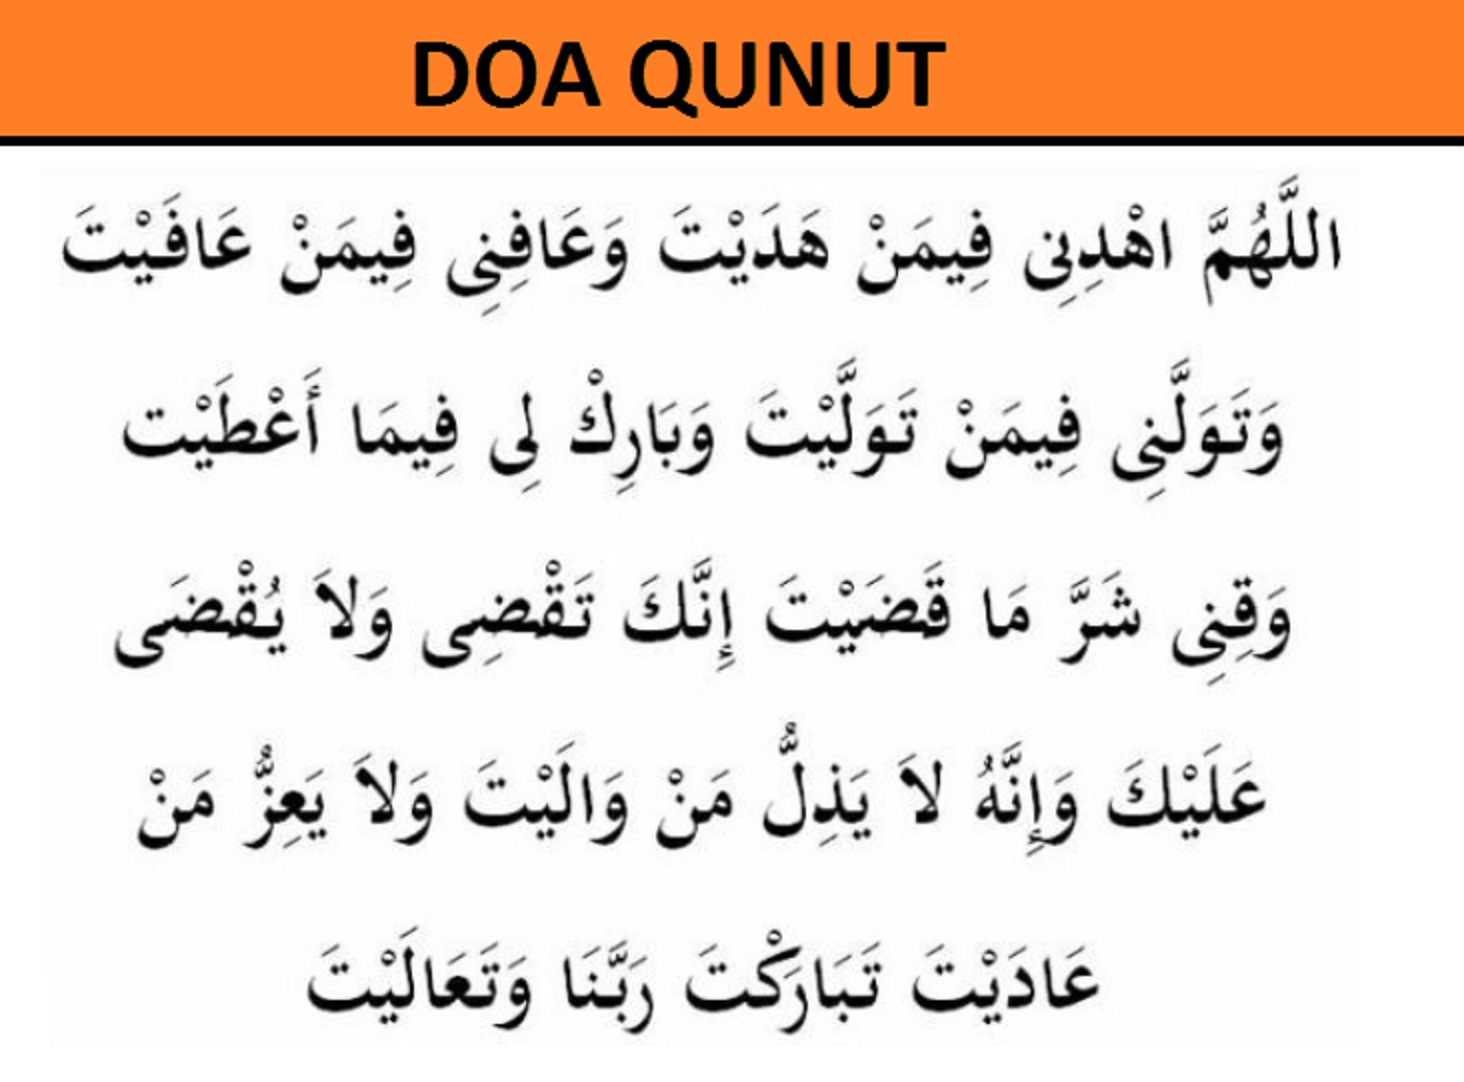 Doa Qunut Arab Dan Latin Homecare